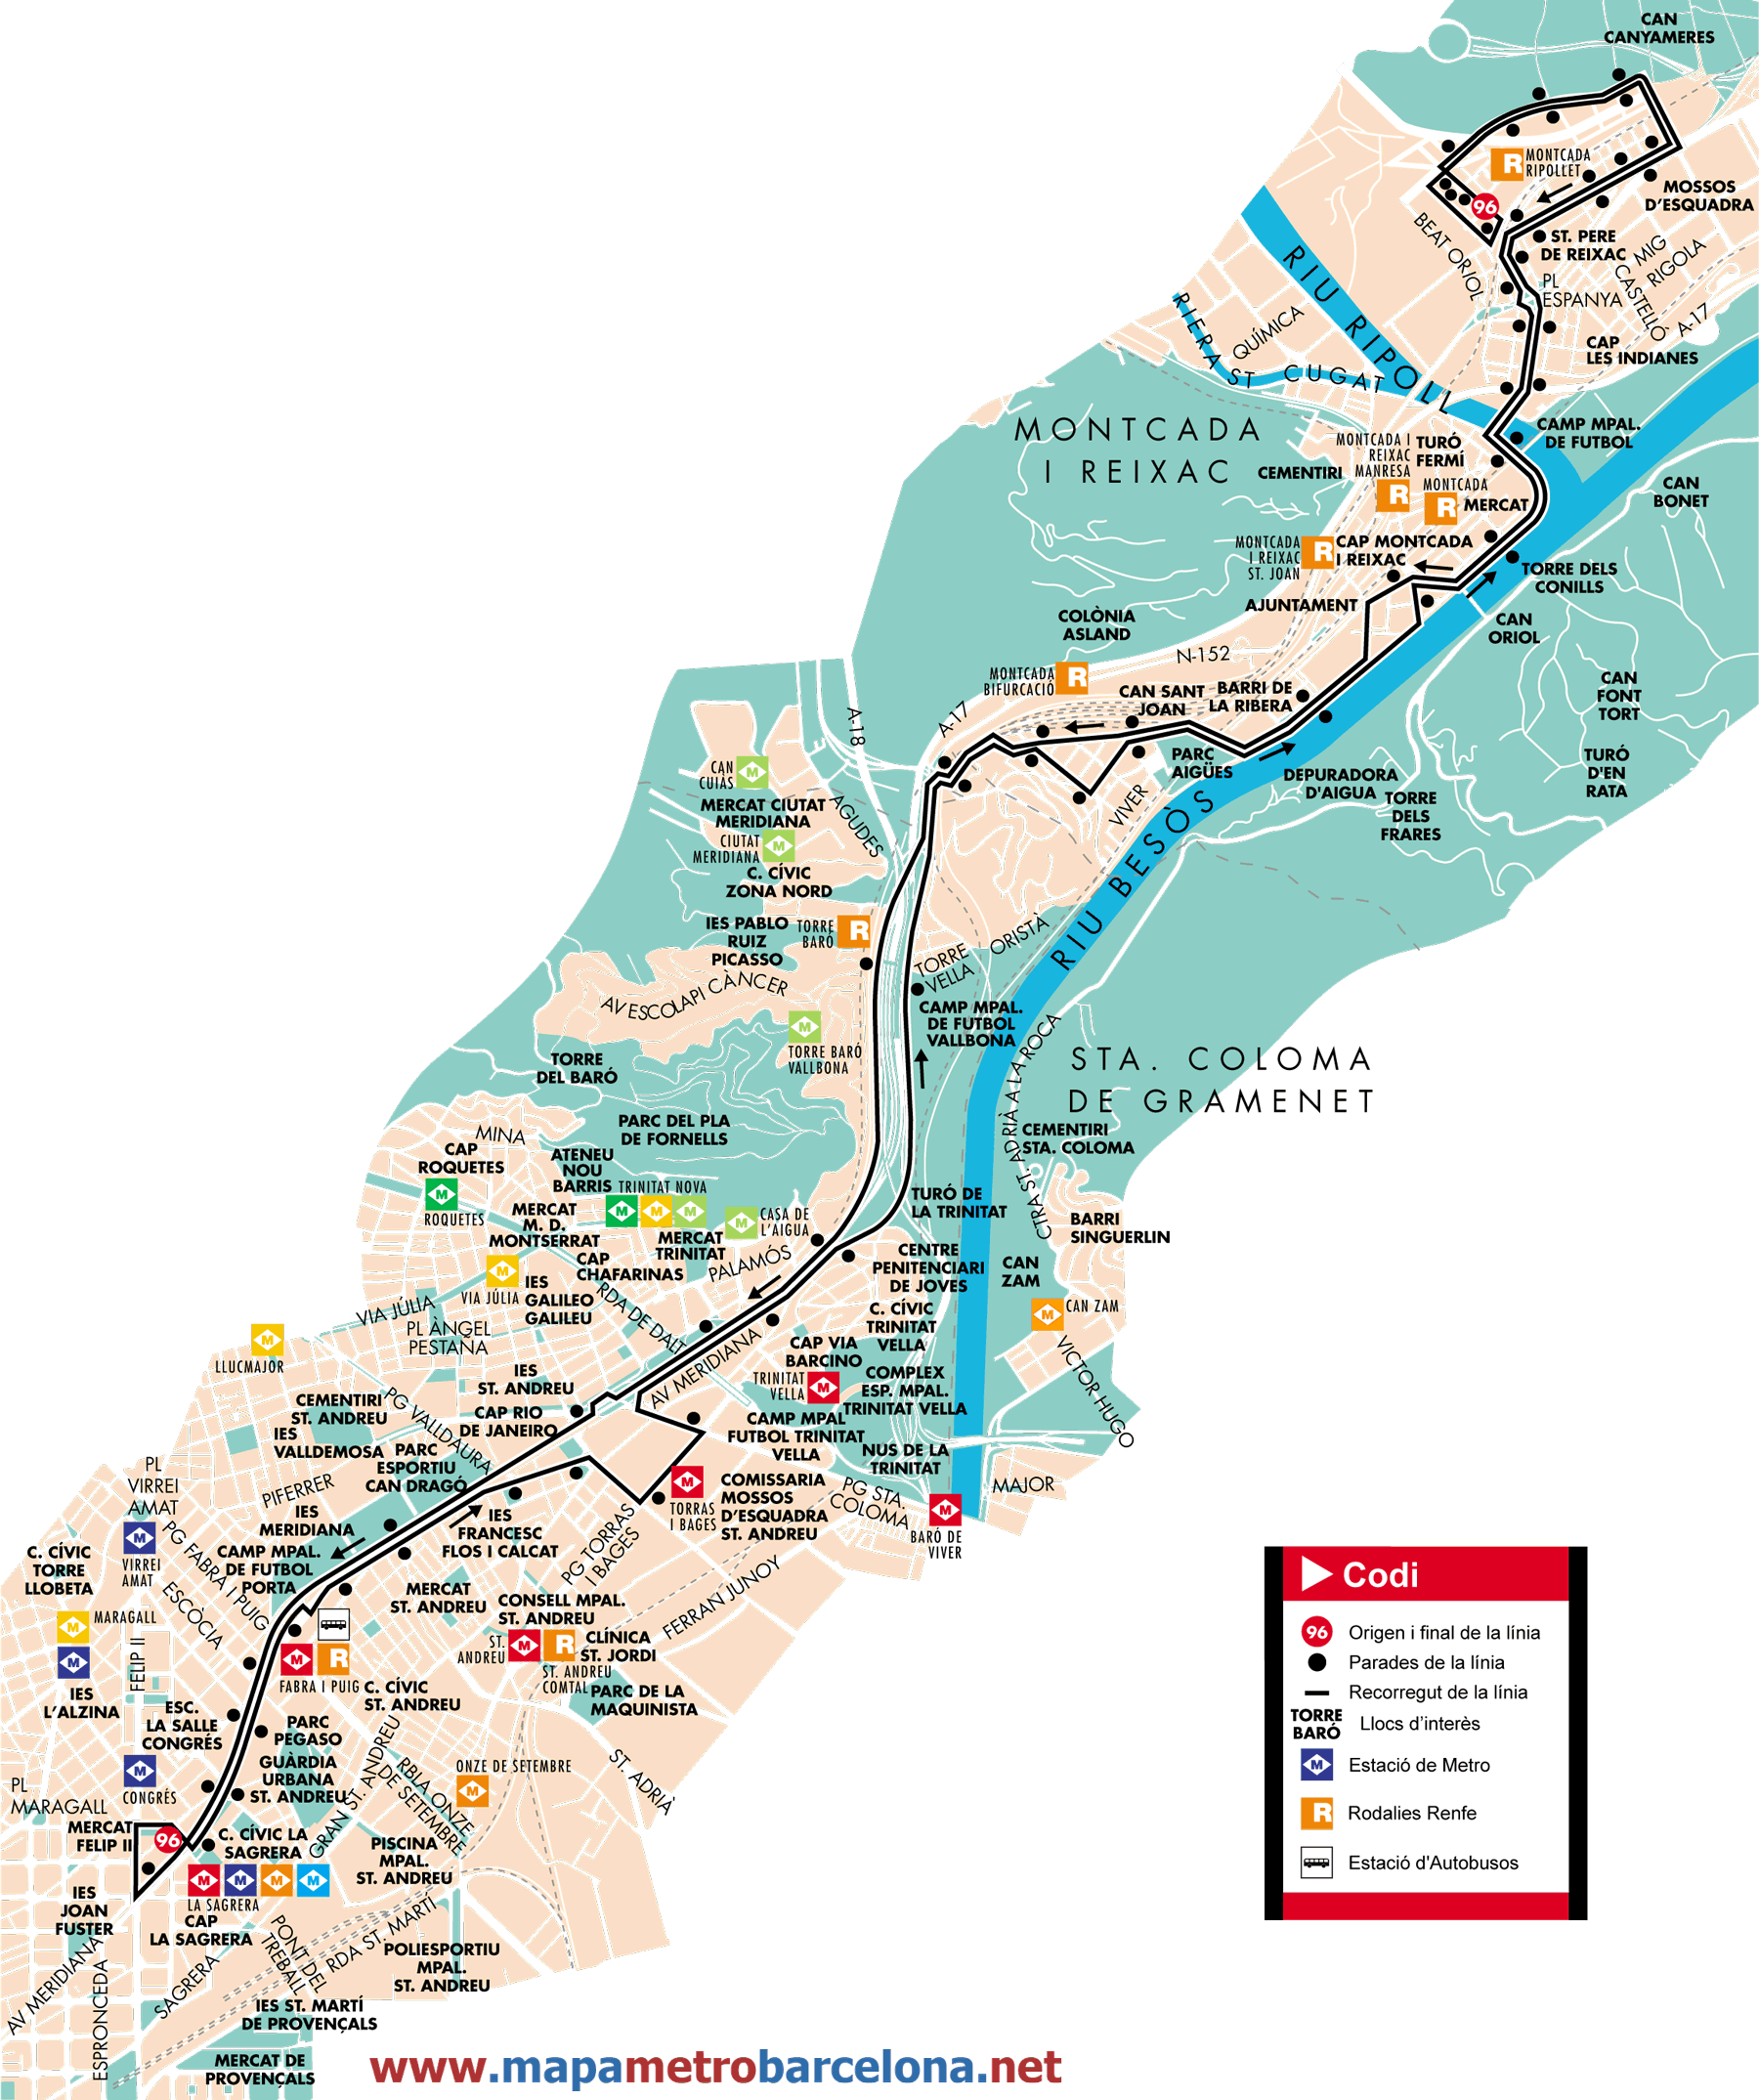 Barcelona bus map line 96